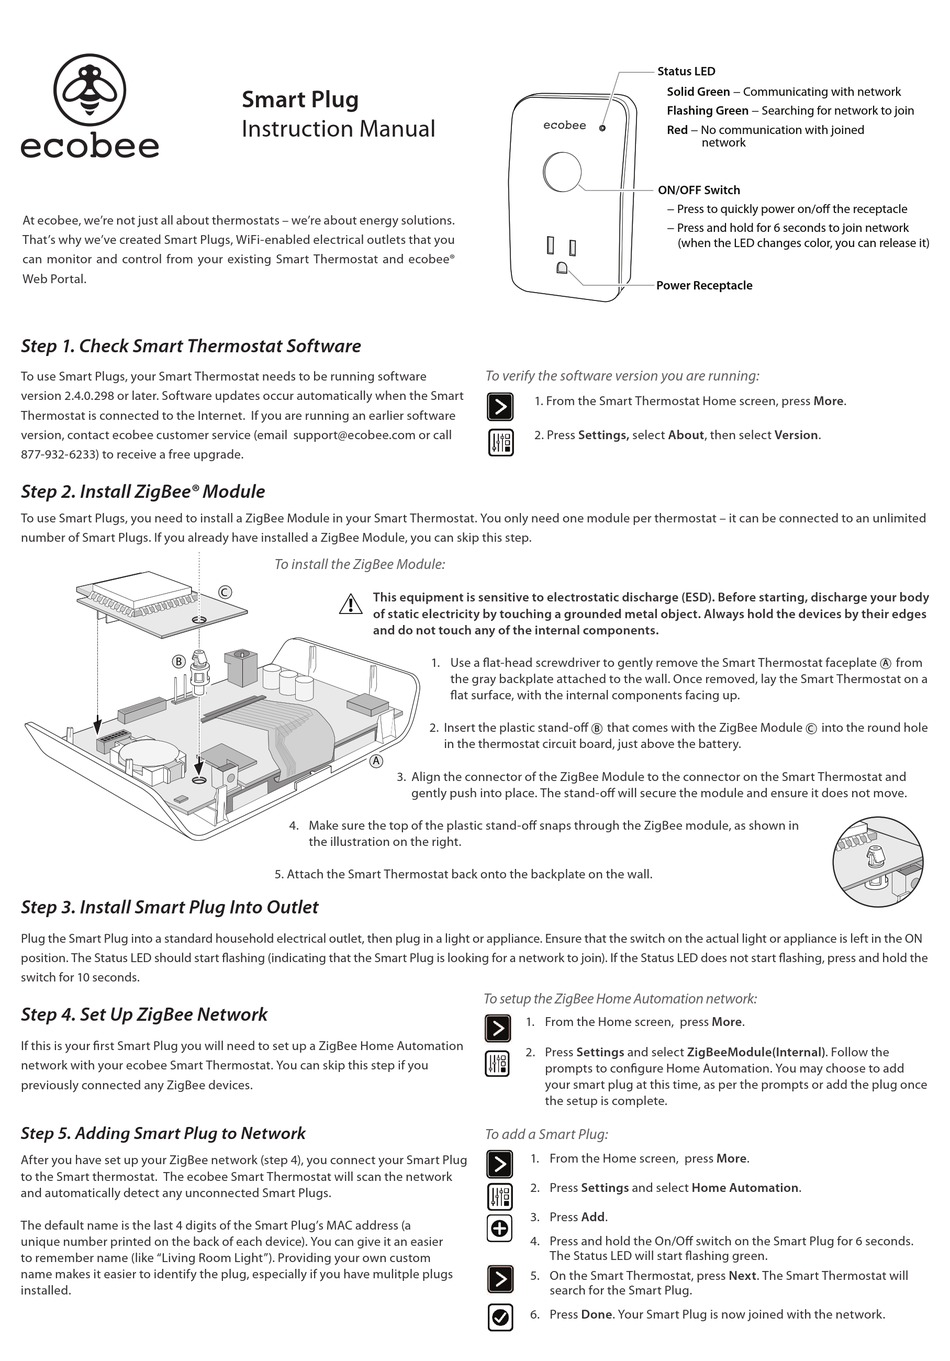 ecobee-smart-plug-instruction-manual-pdf-download-manualslib